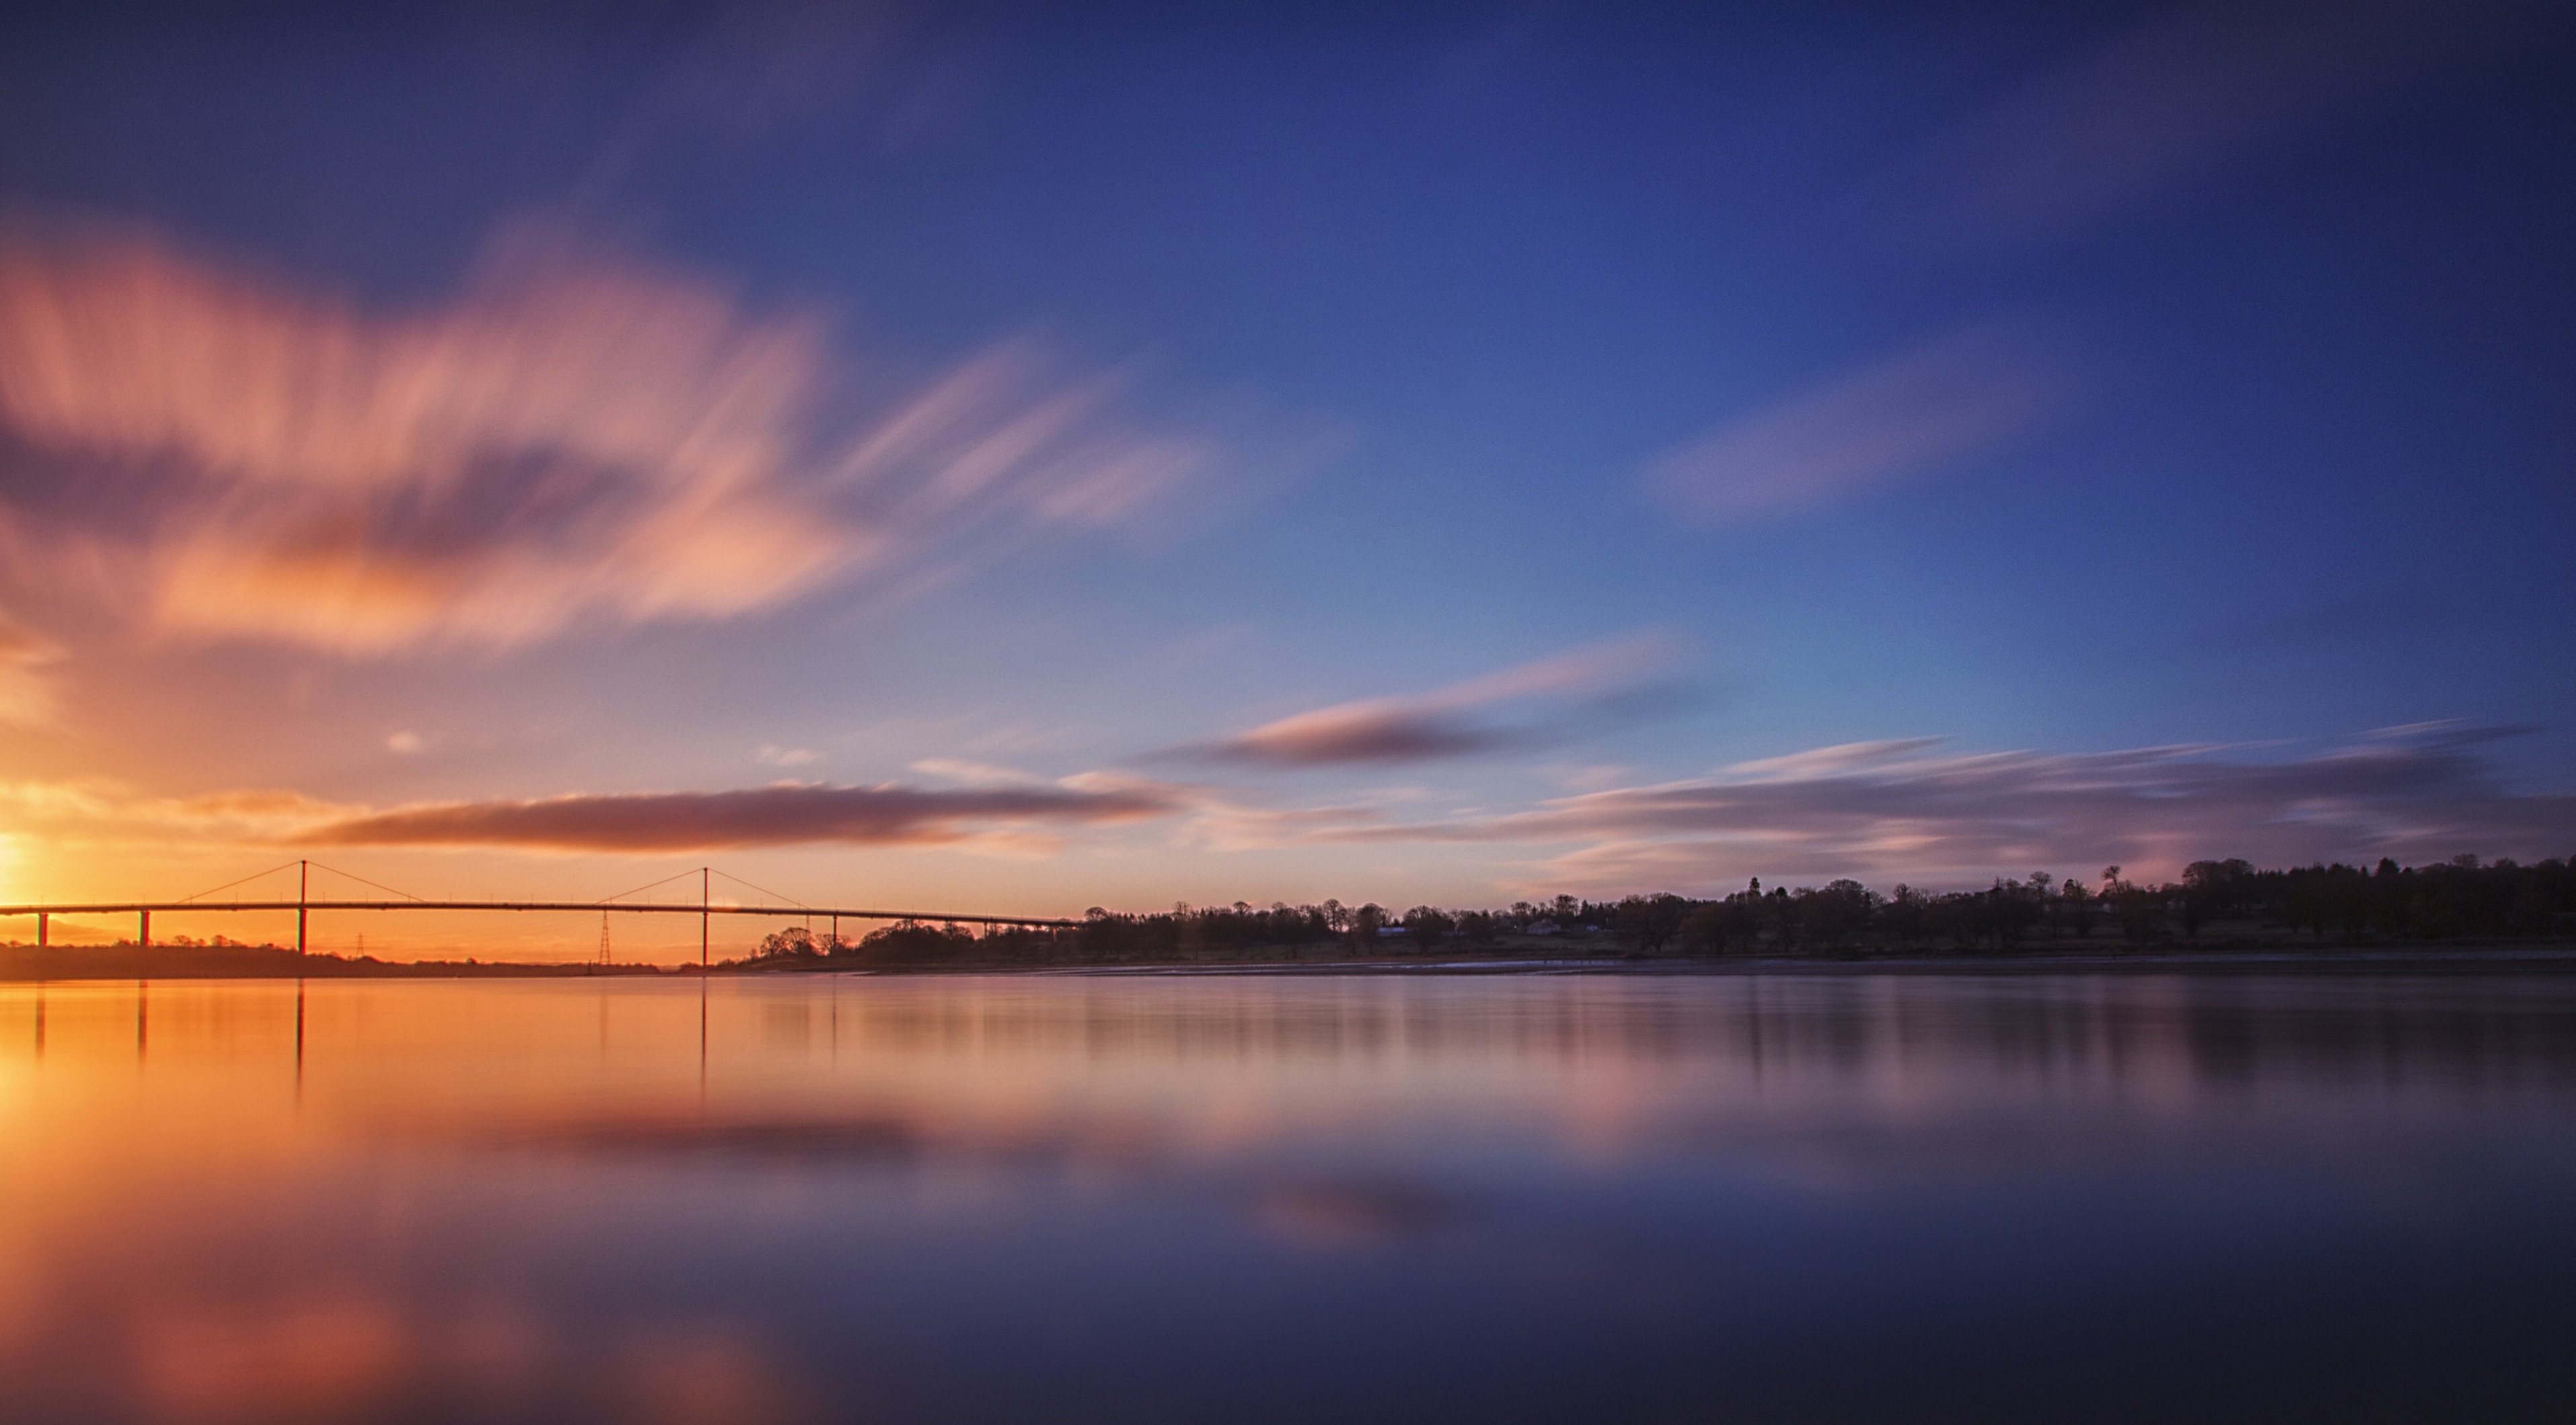 River Clyde At Morning, HD Nature, 4k Wallpaper, Image